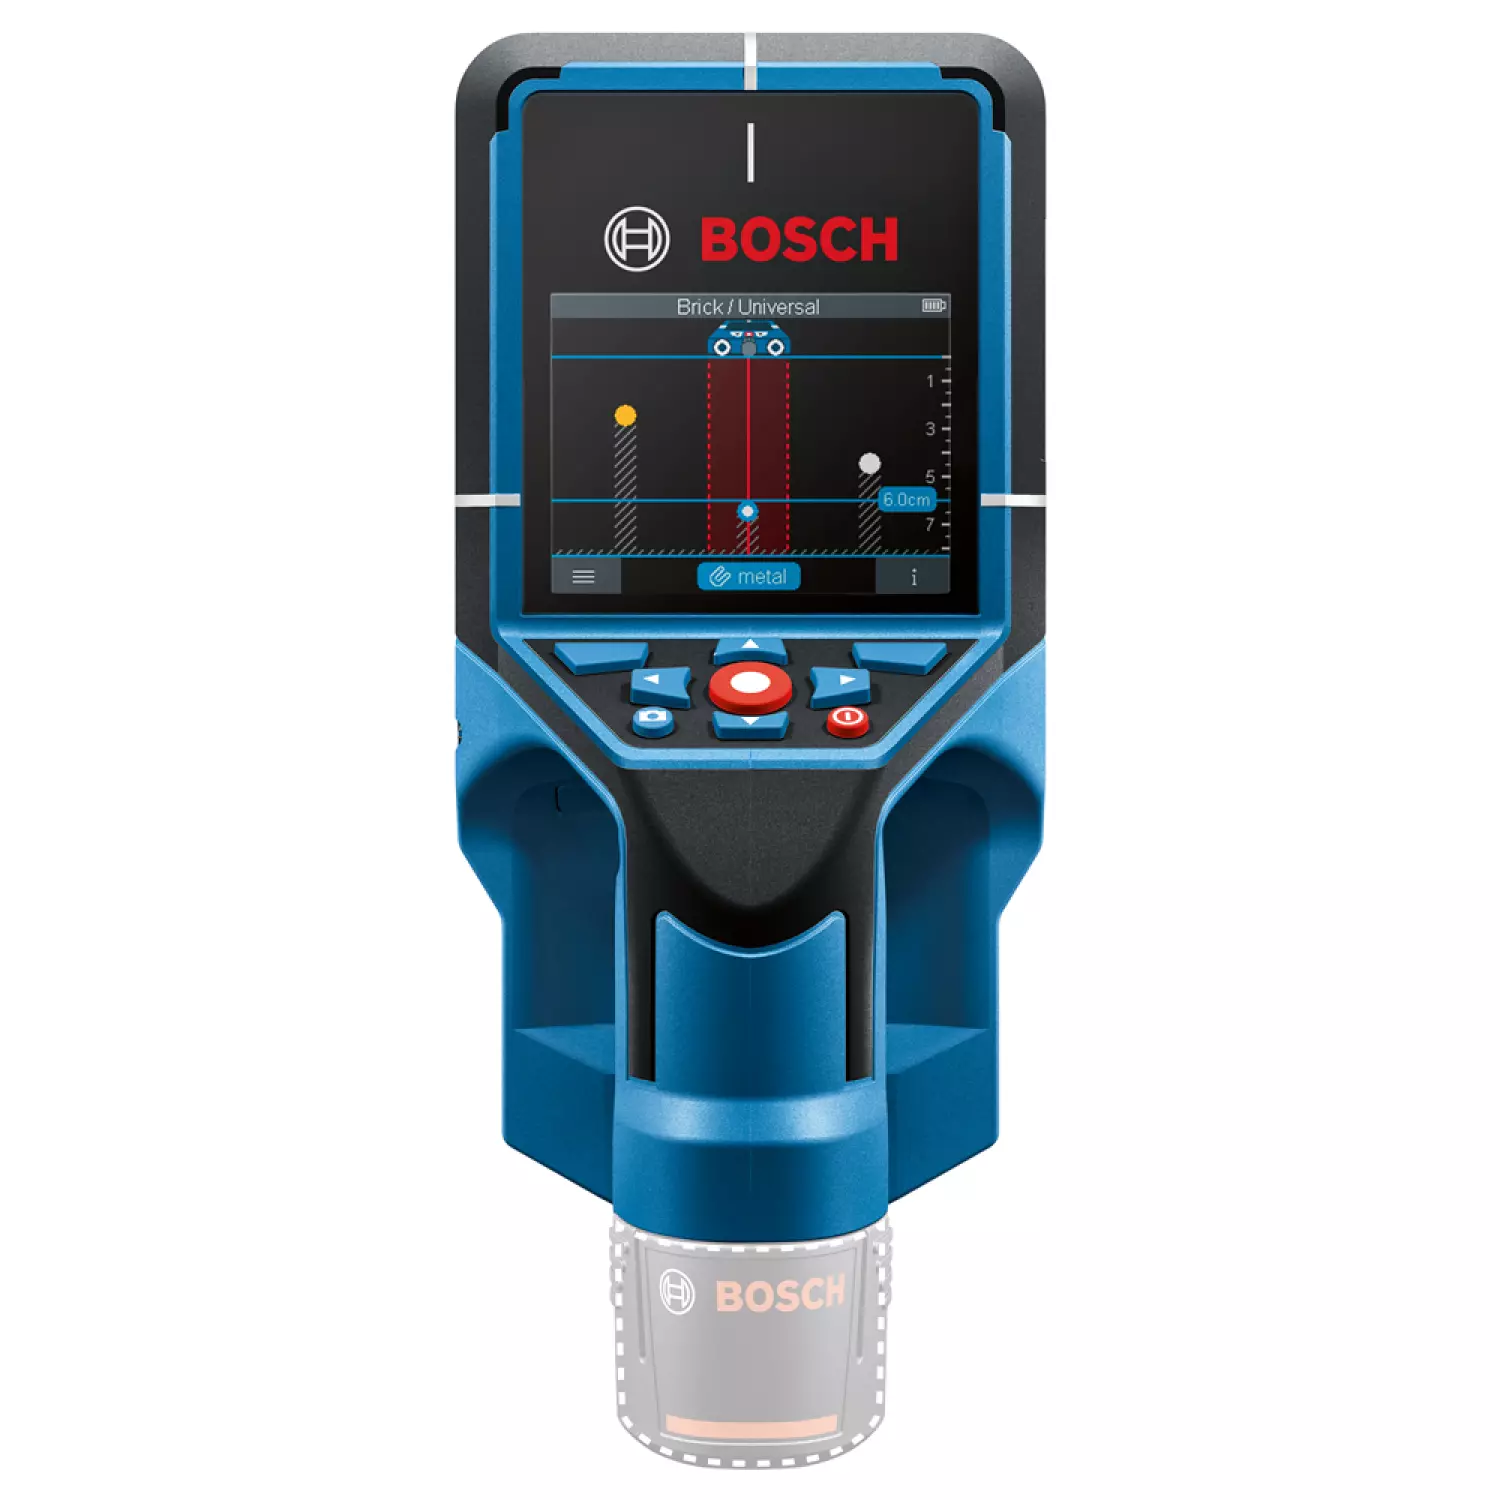 Bosch D-tect 200 C Detector muurscanner body in L-Boxx - 200mm